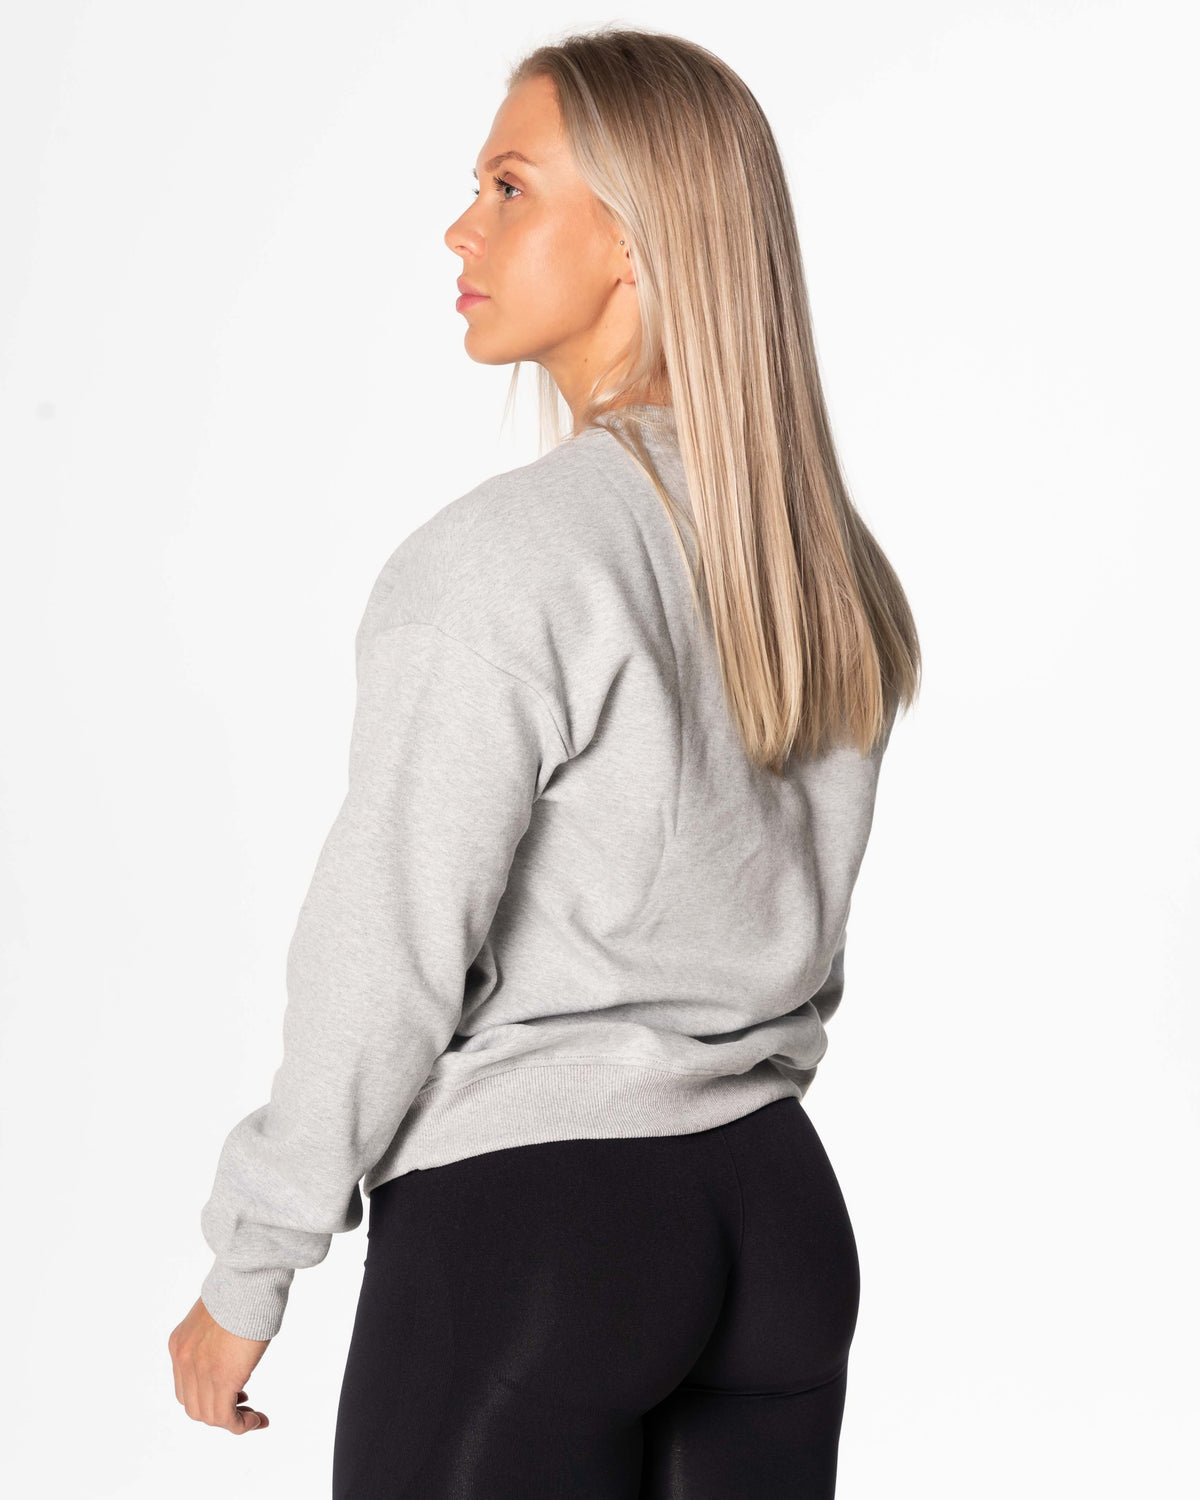 Maverick Women's Sweatshirt - Grey